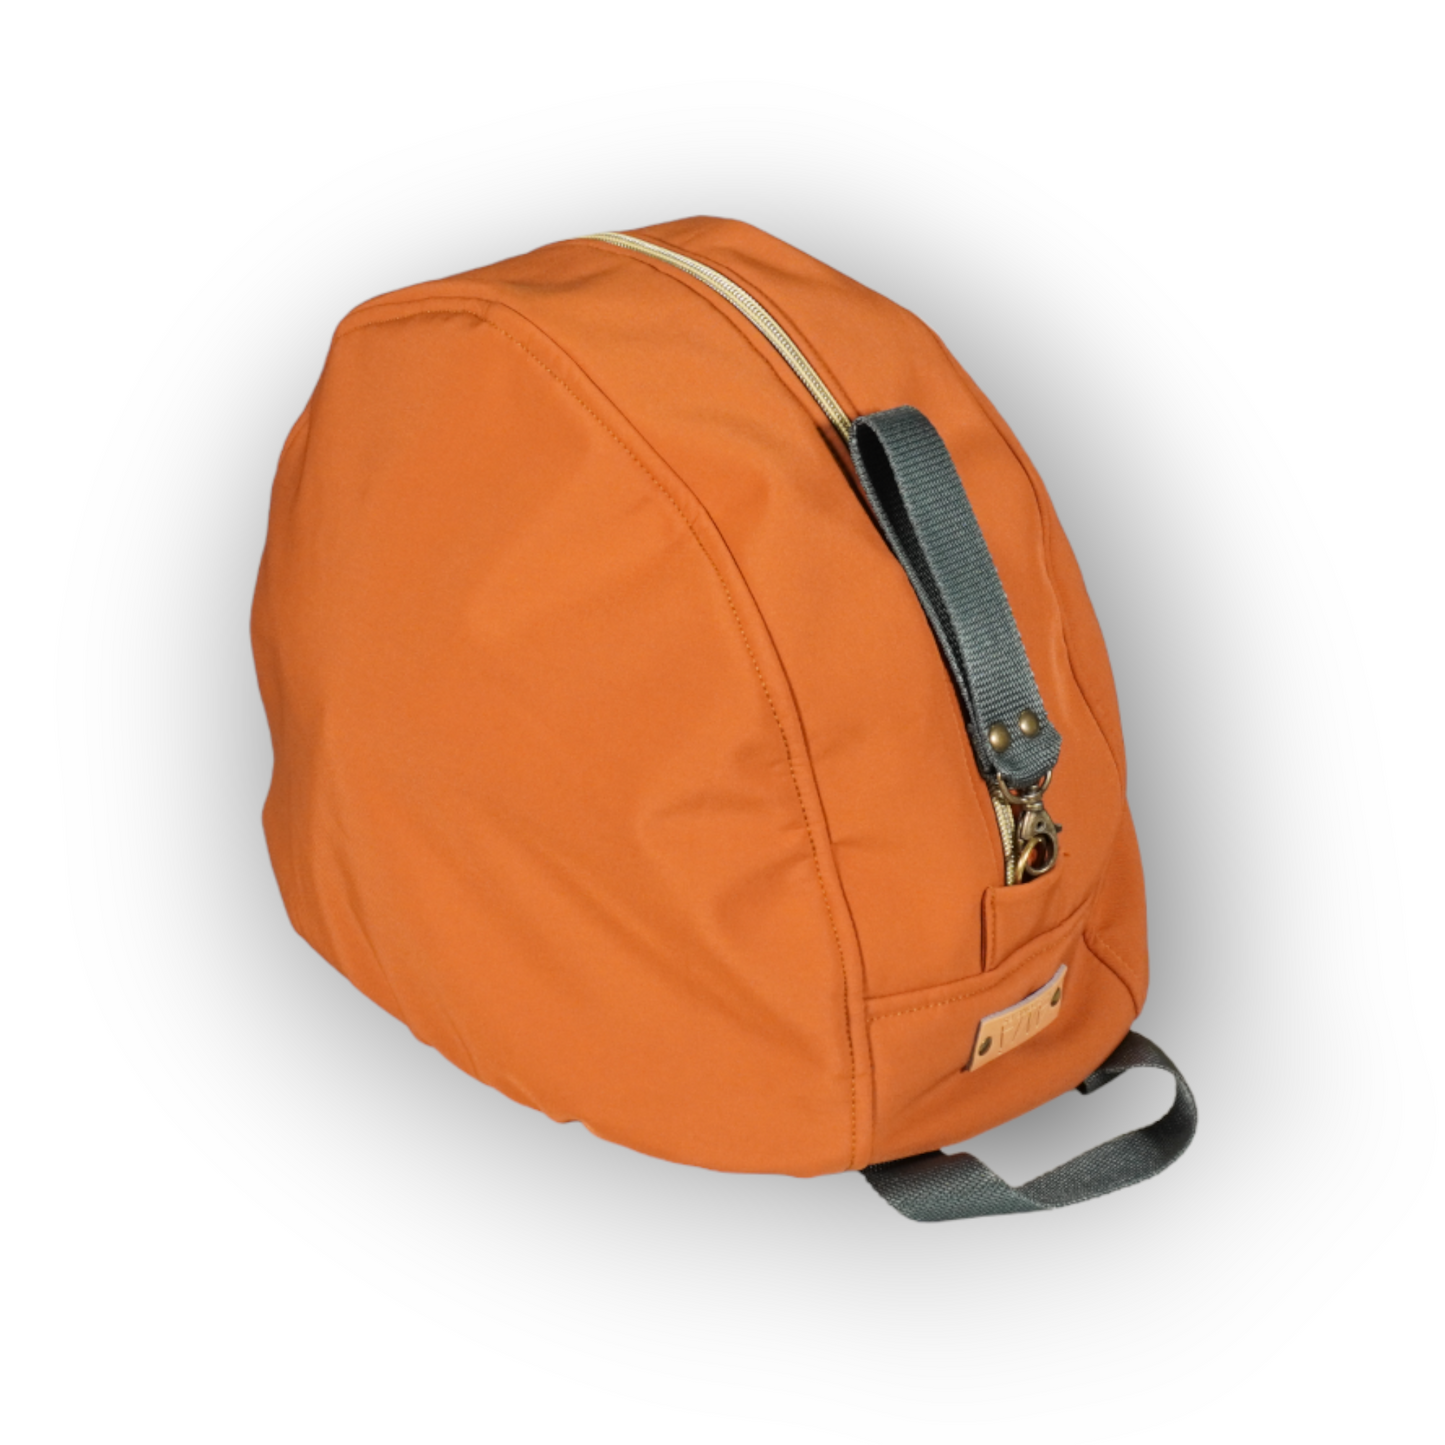 Mochila/Bolsa para casco impermeable - Caramelo y gris 59,90€ - ¡ENVIO  GRATIS! –